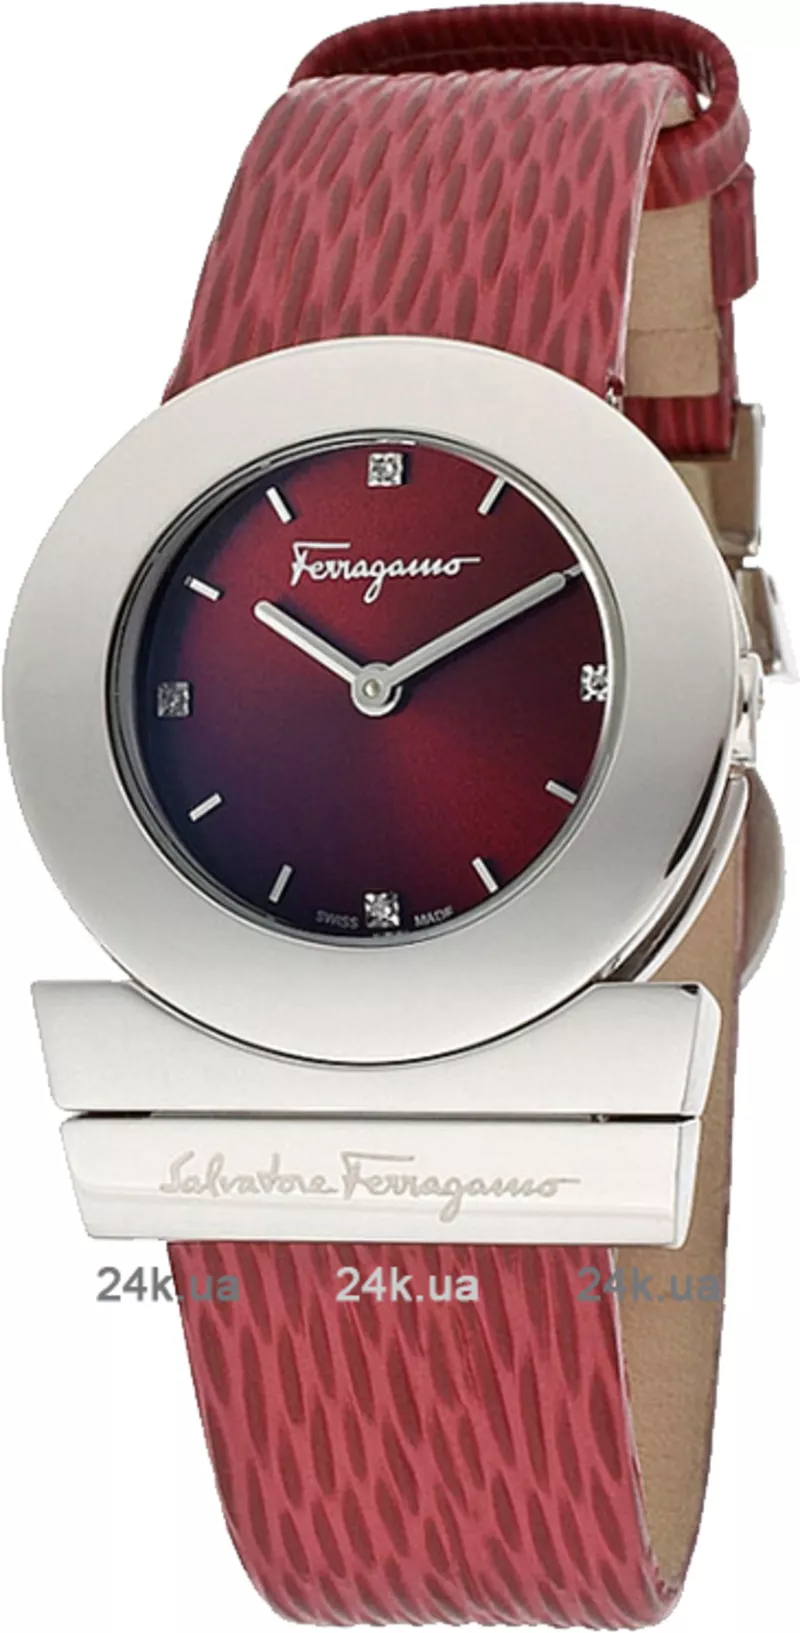 Часы Salvatore Ferragamo Fr56sbq9926 s006